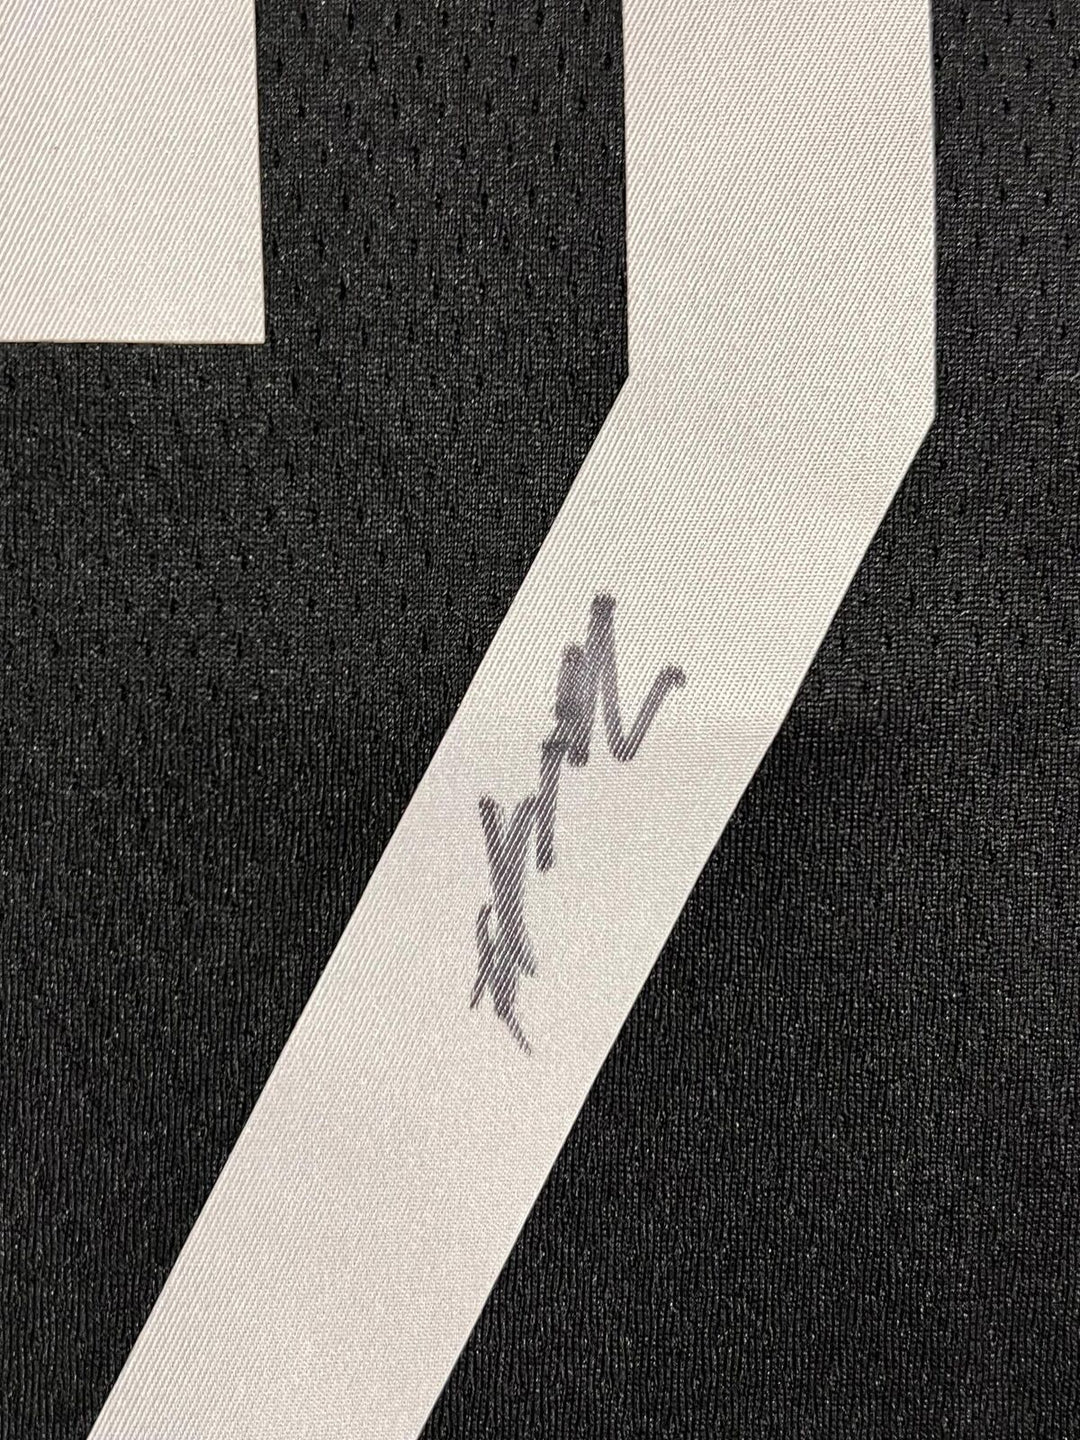 Alperen Segun signed jersey PSA/DNA Houston Rockets Autographed Image 2